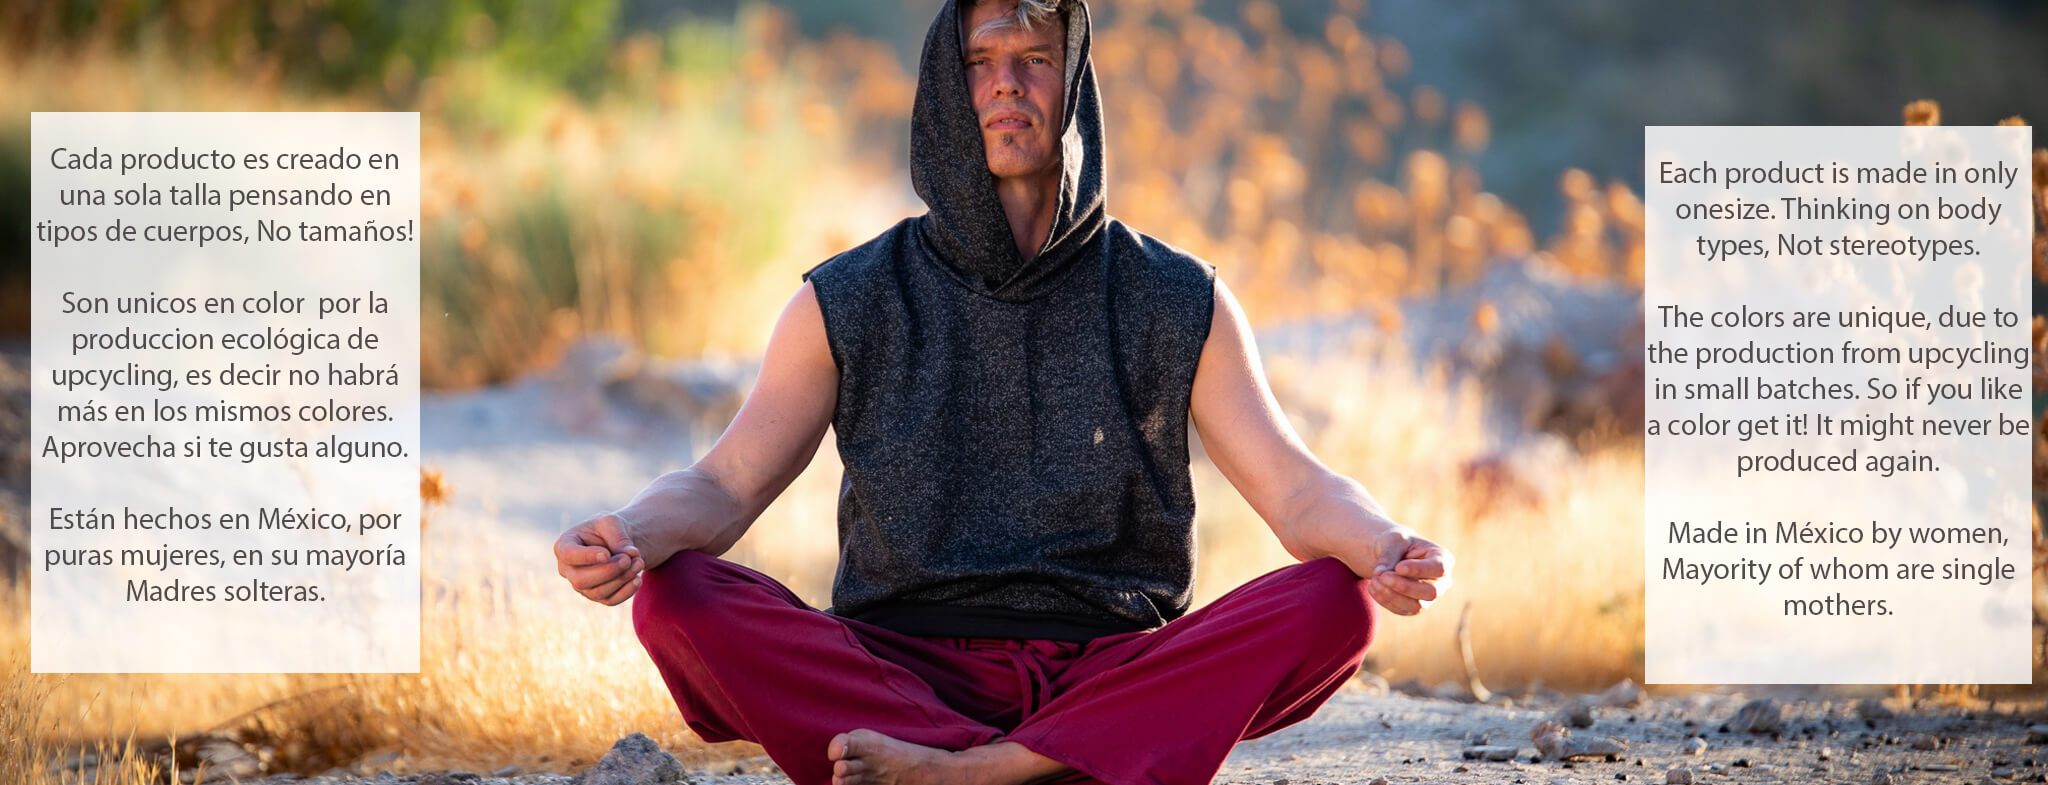 pantalon yoga para hombre meditacion